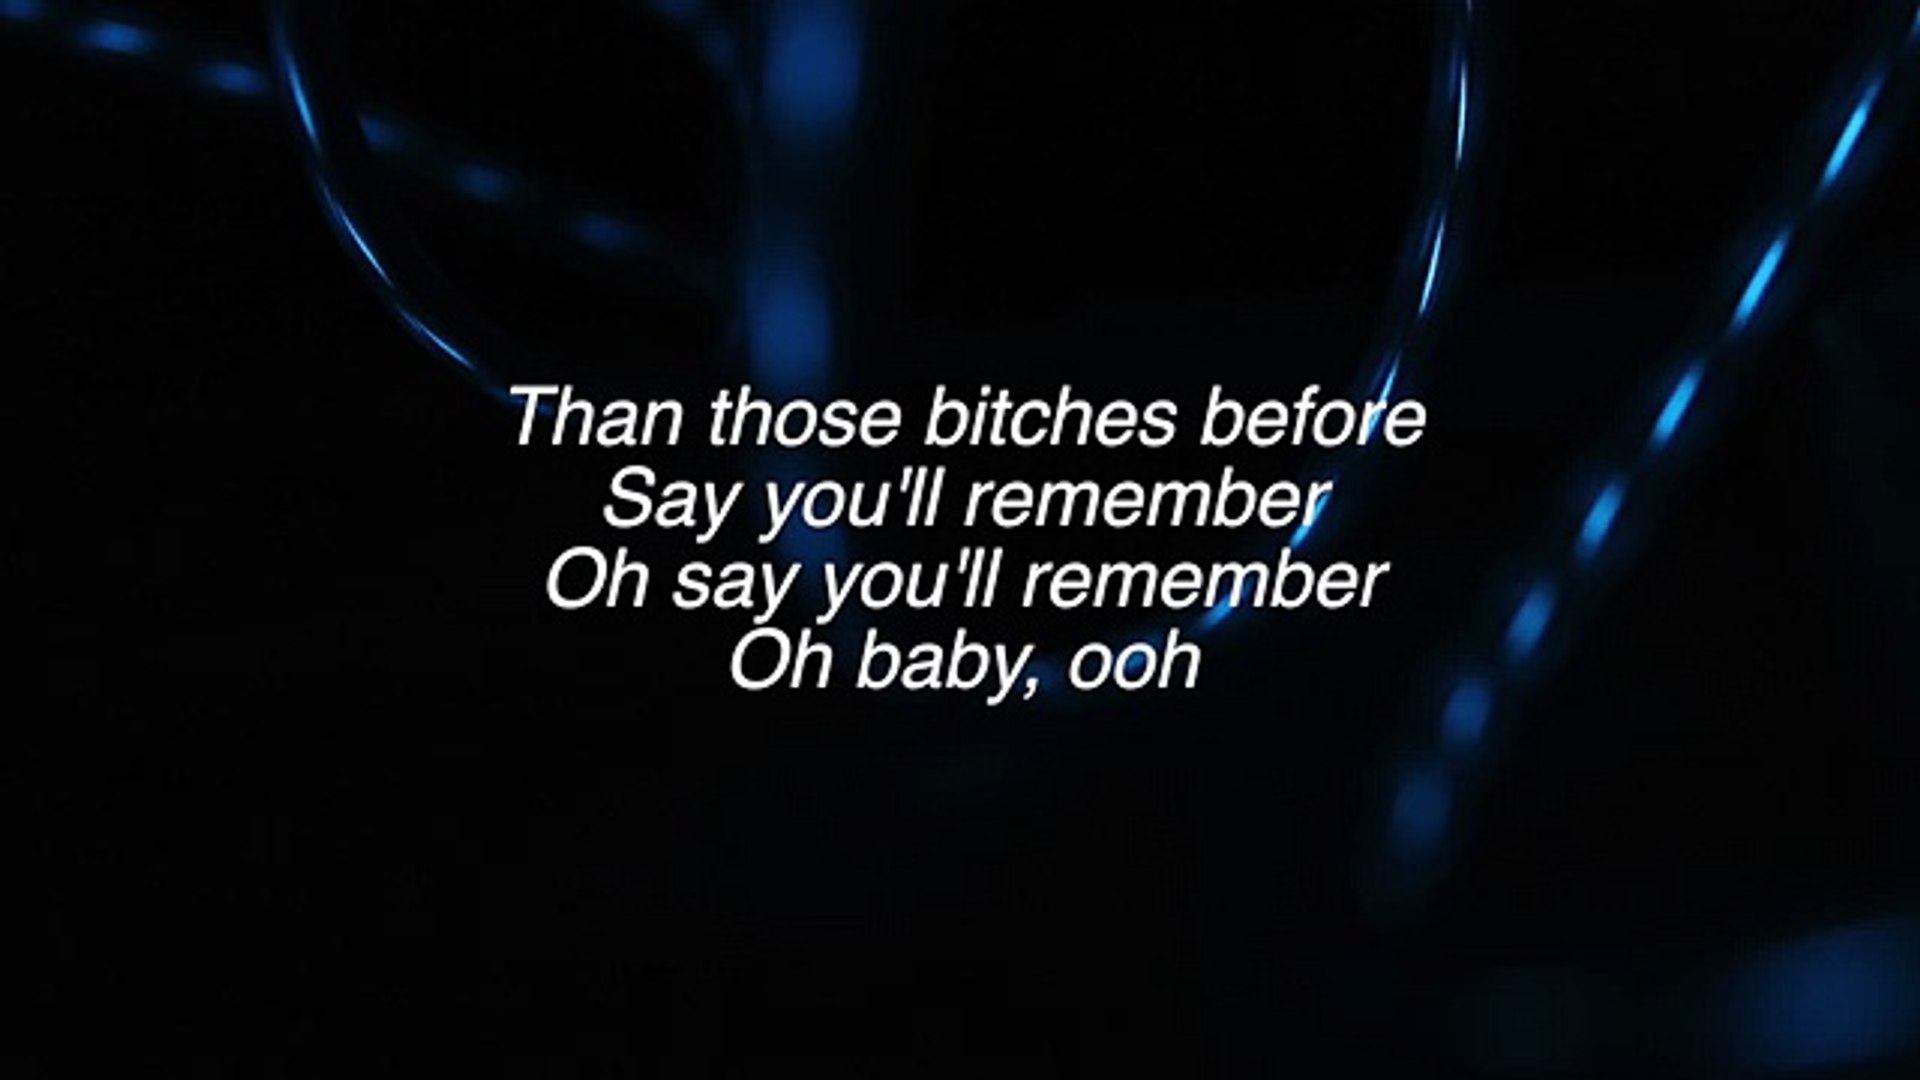 Buysong.us Blue Jeans - Sofia Karlberg Lyrics (Lana del Rey Cover) -  YouTube - video Dailymotion